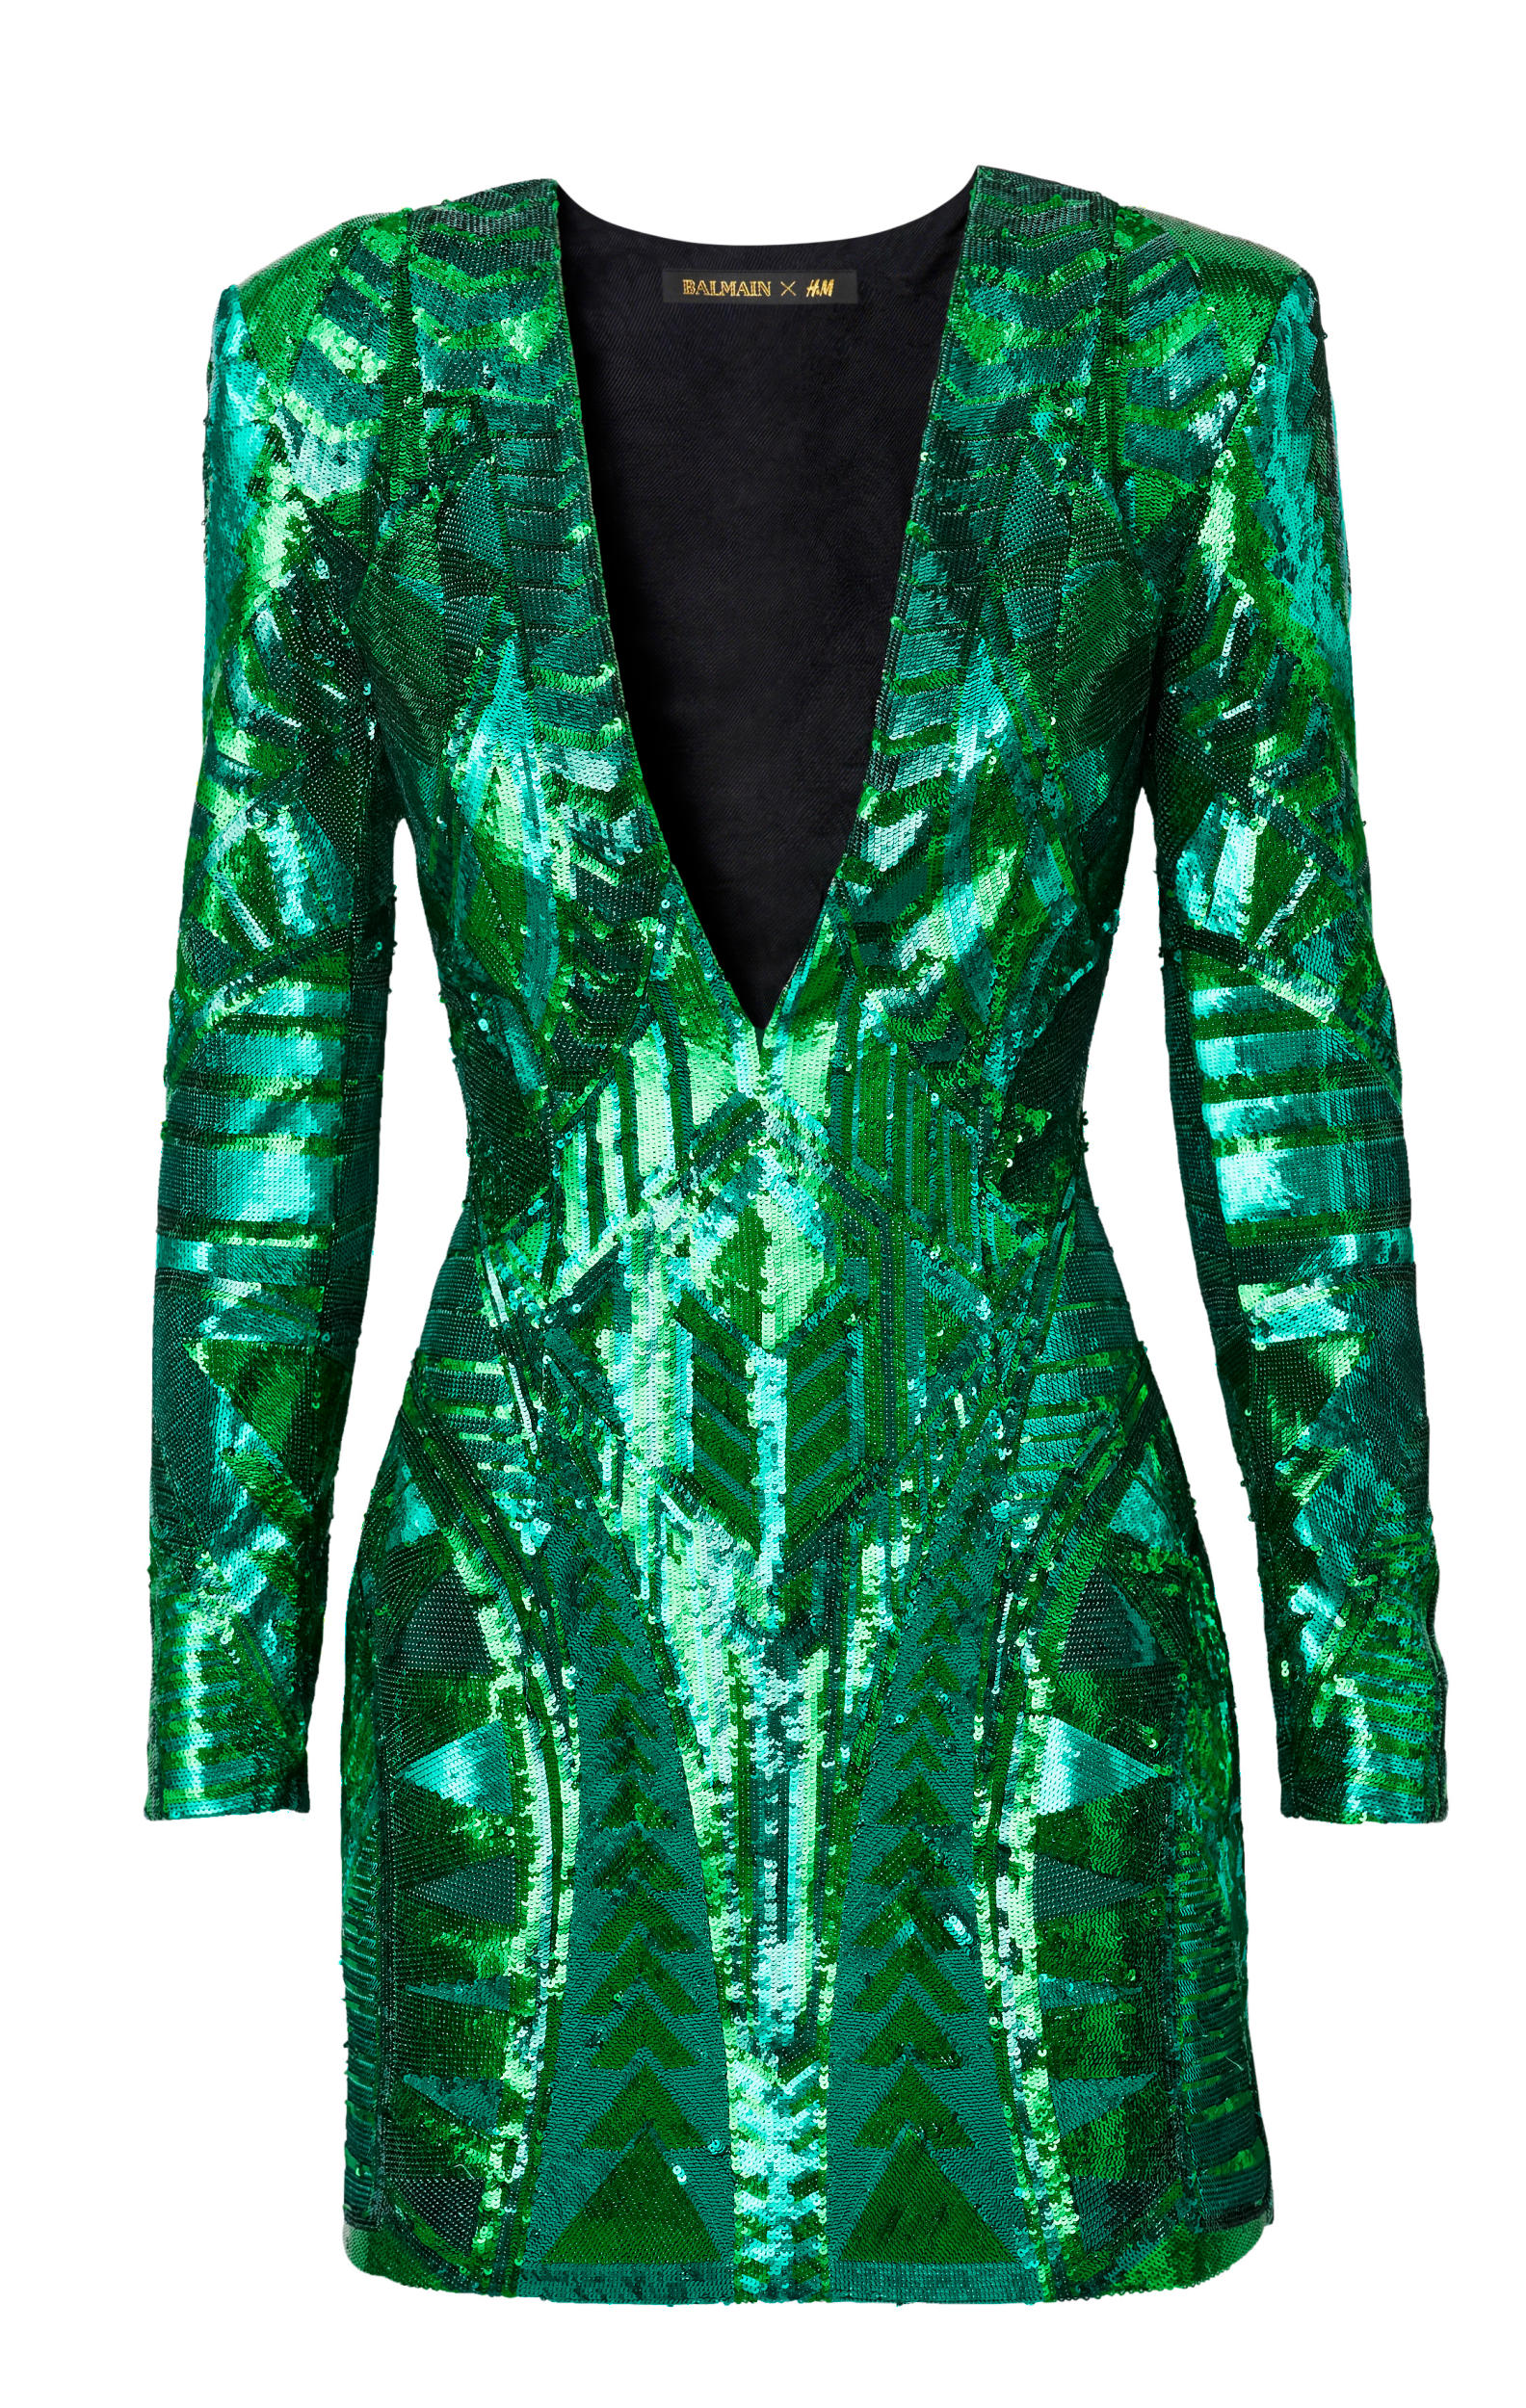 Balmain x H&M metallic green dress